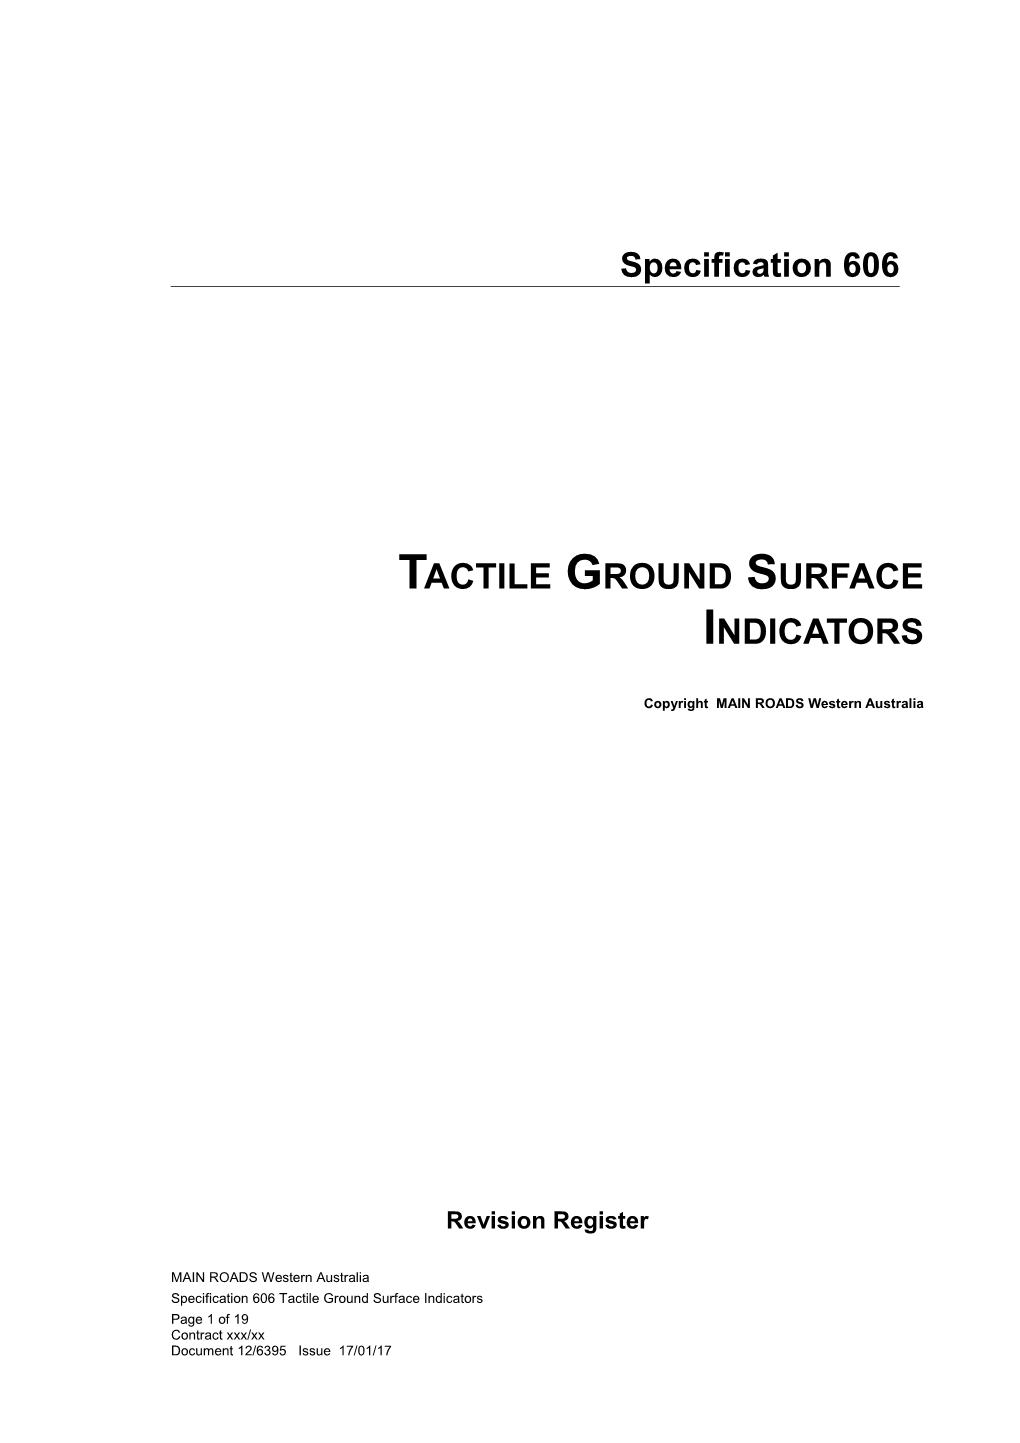 Tactile Ground Surface Indicators